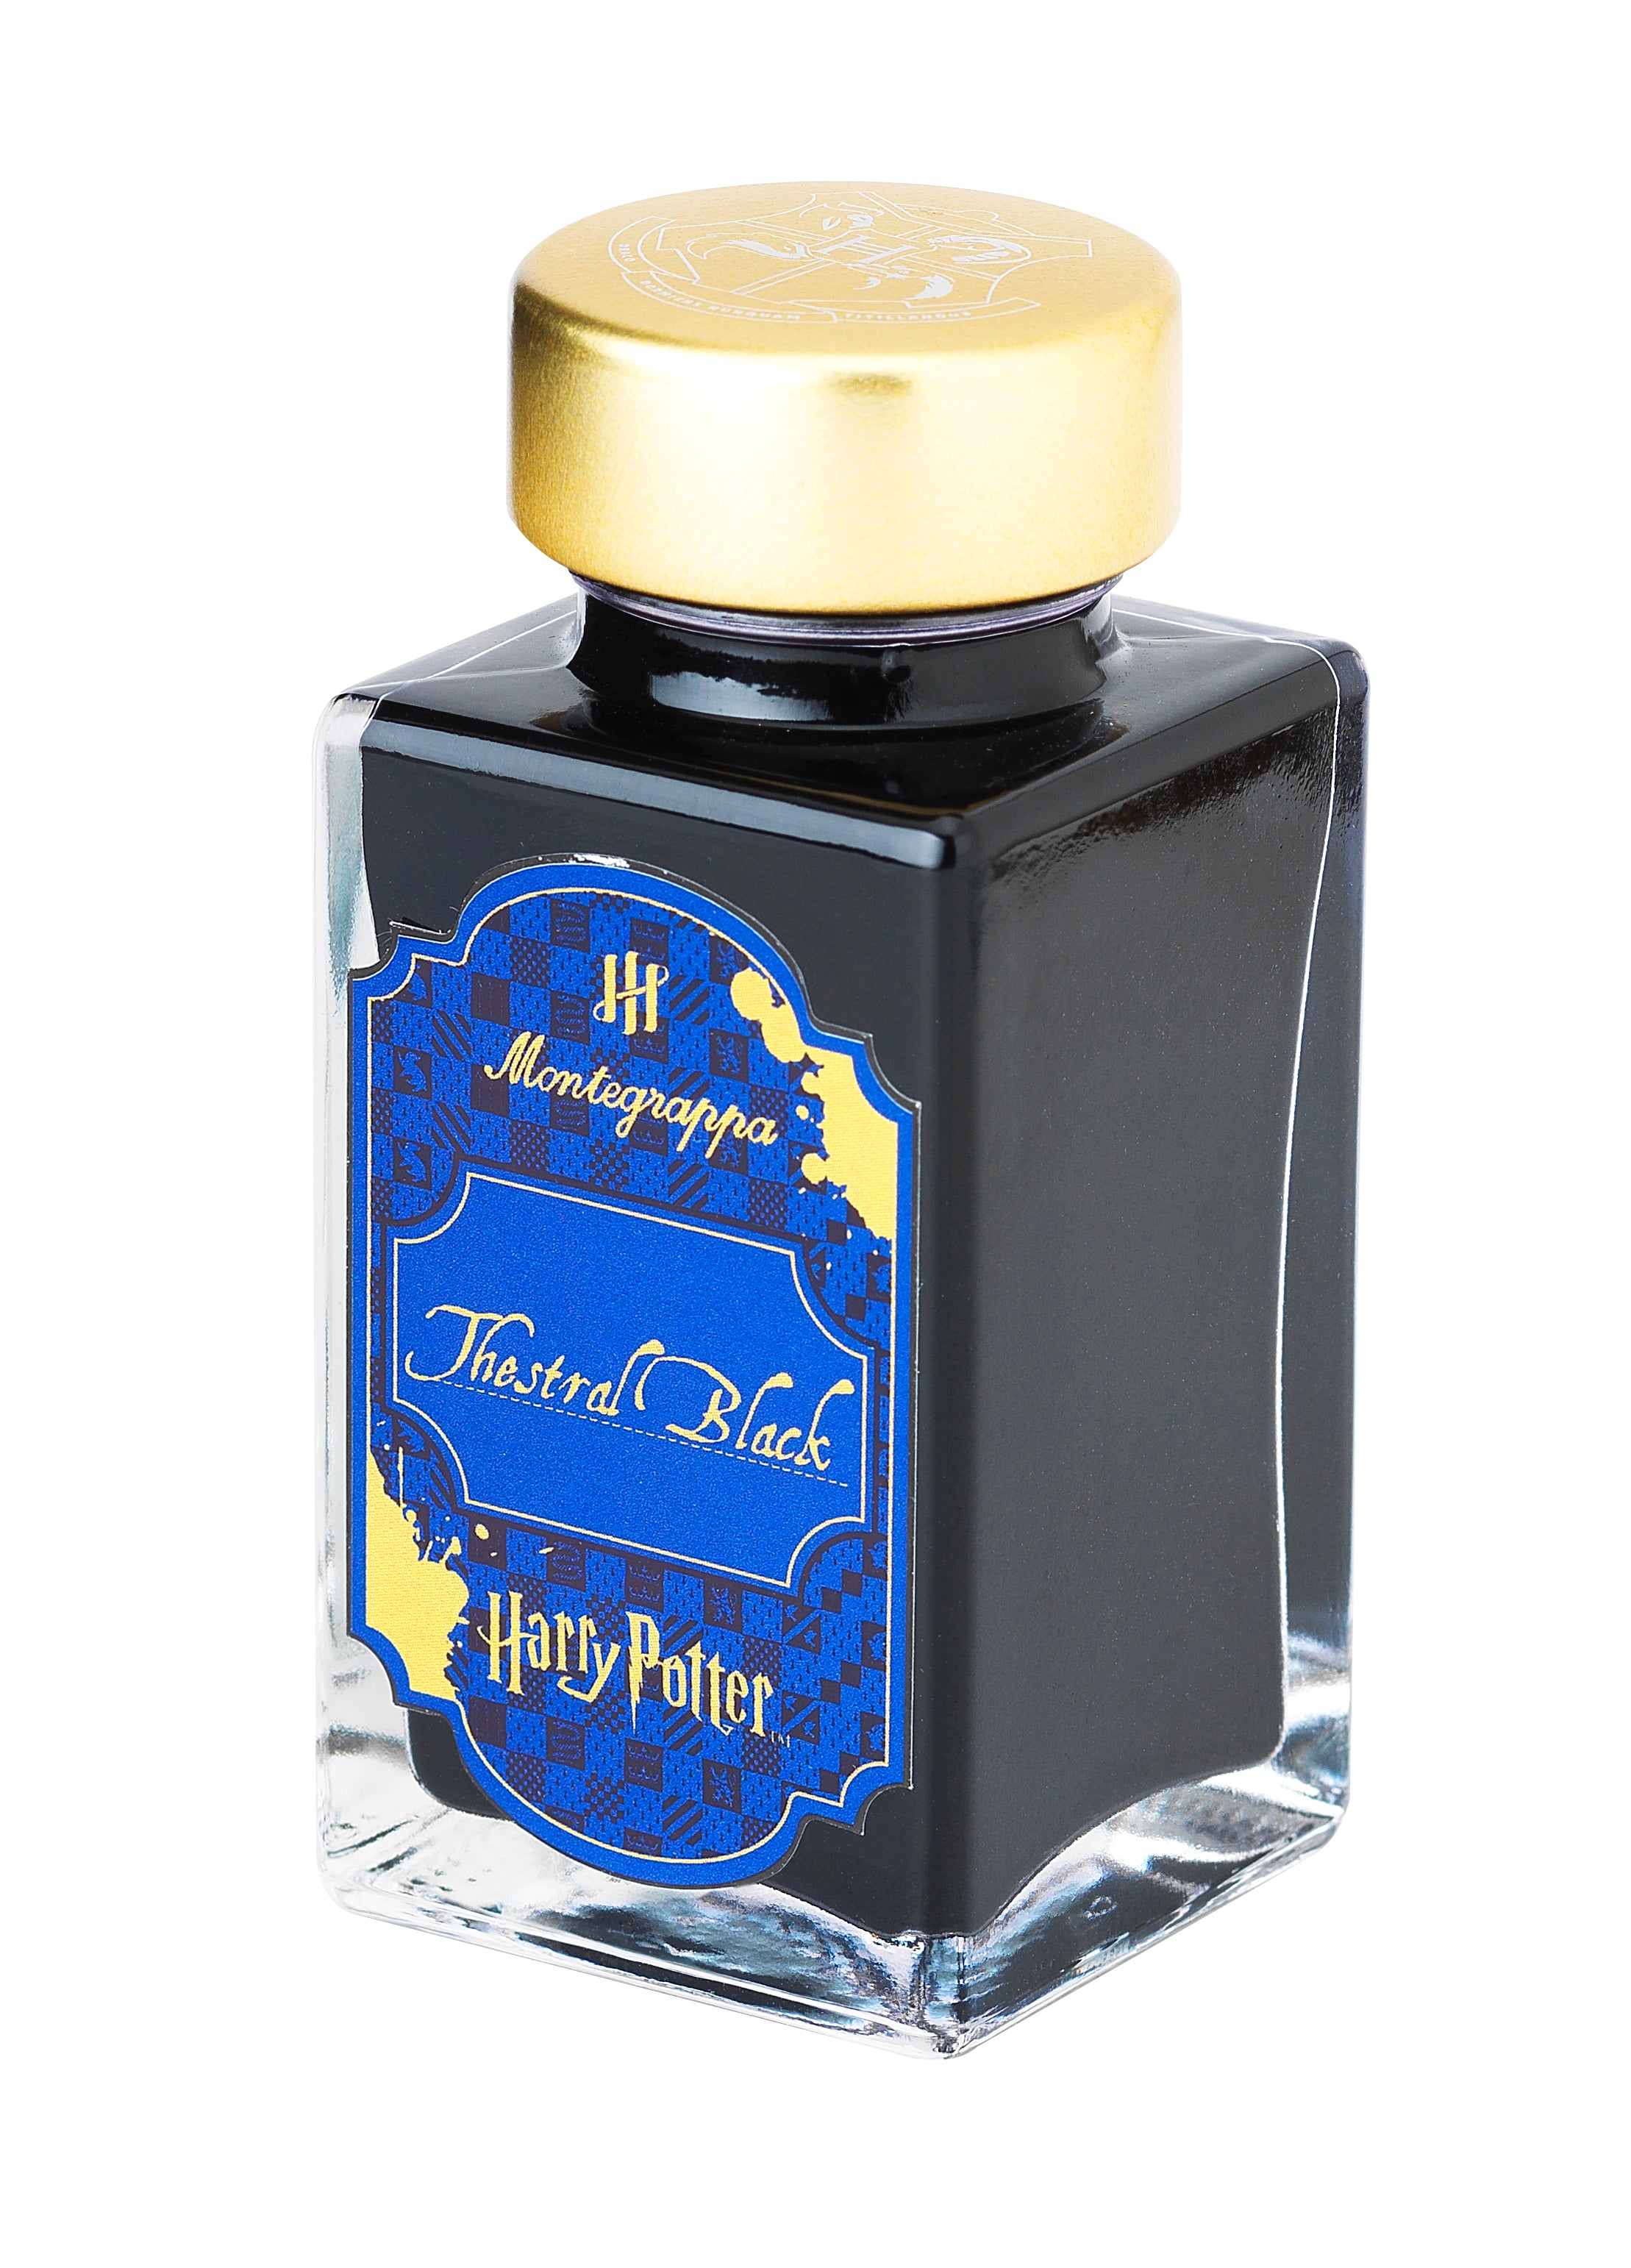 HP ink Thestral Black